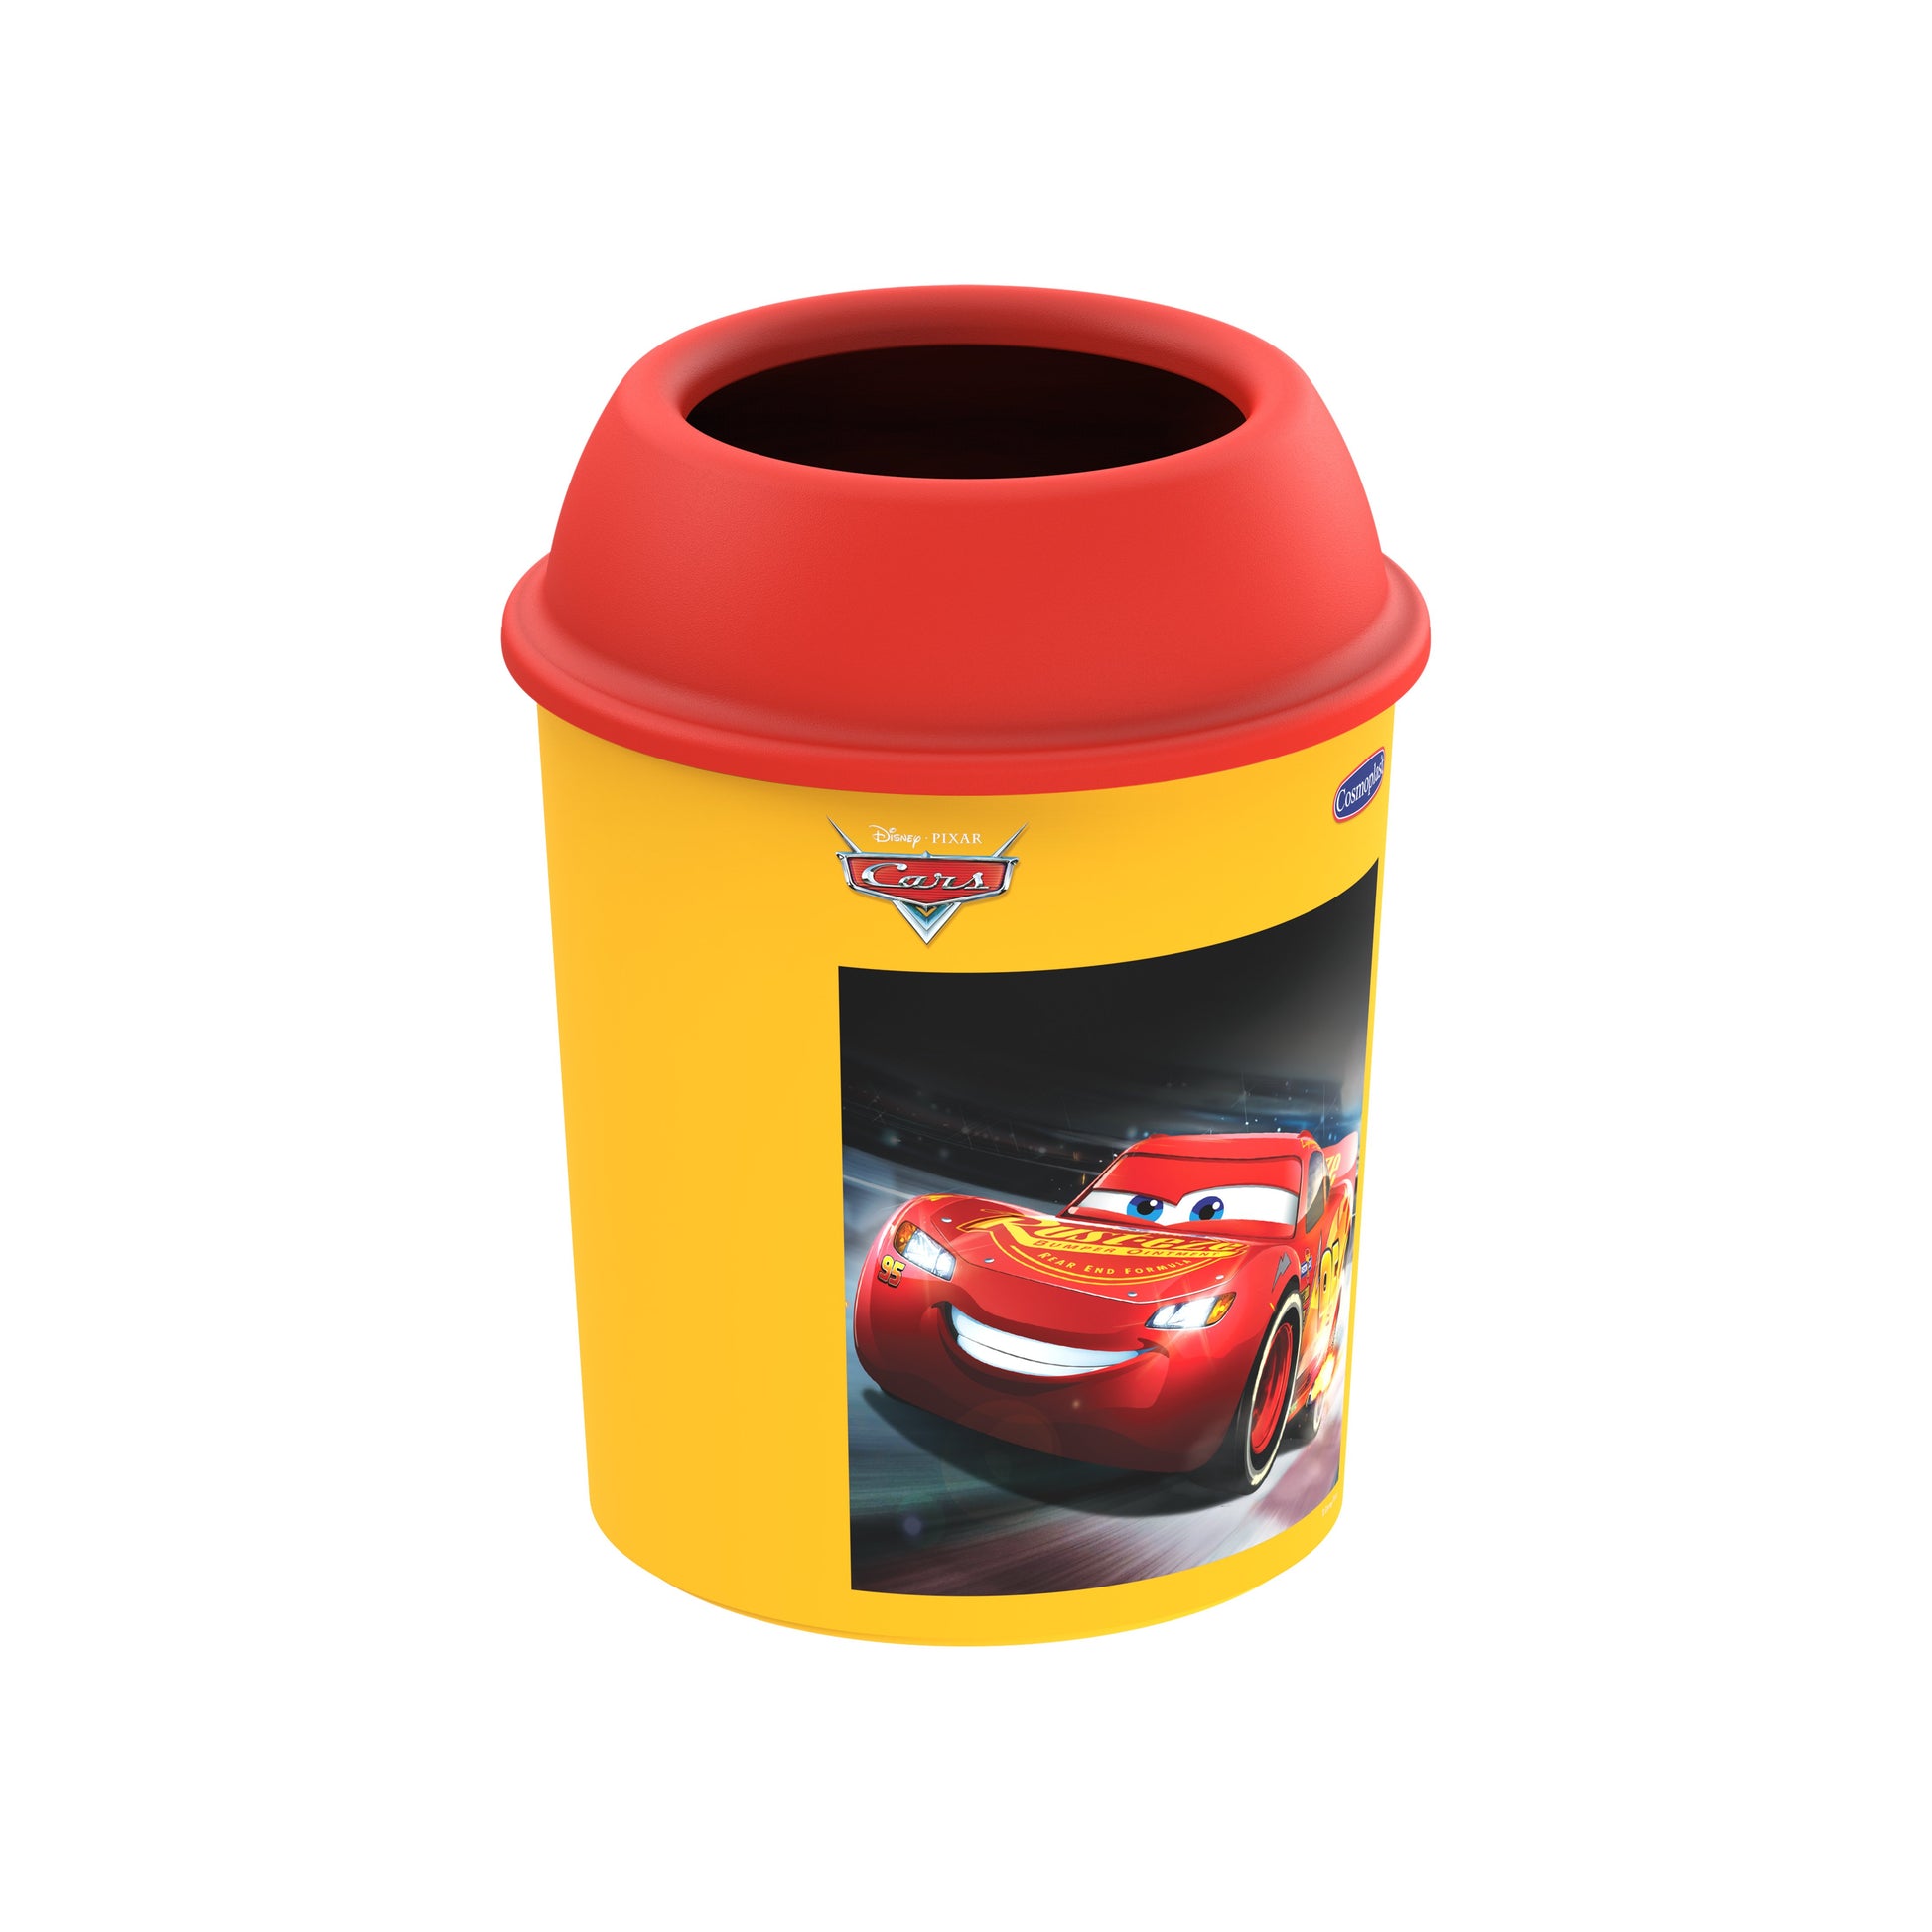 Cosmoplast Disney Pixar Cars Plastic Round Dust Bin 5 Liters